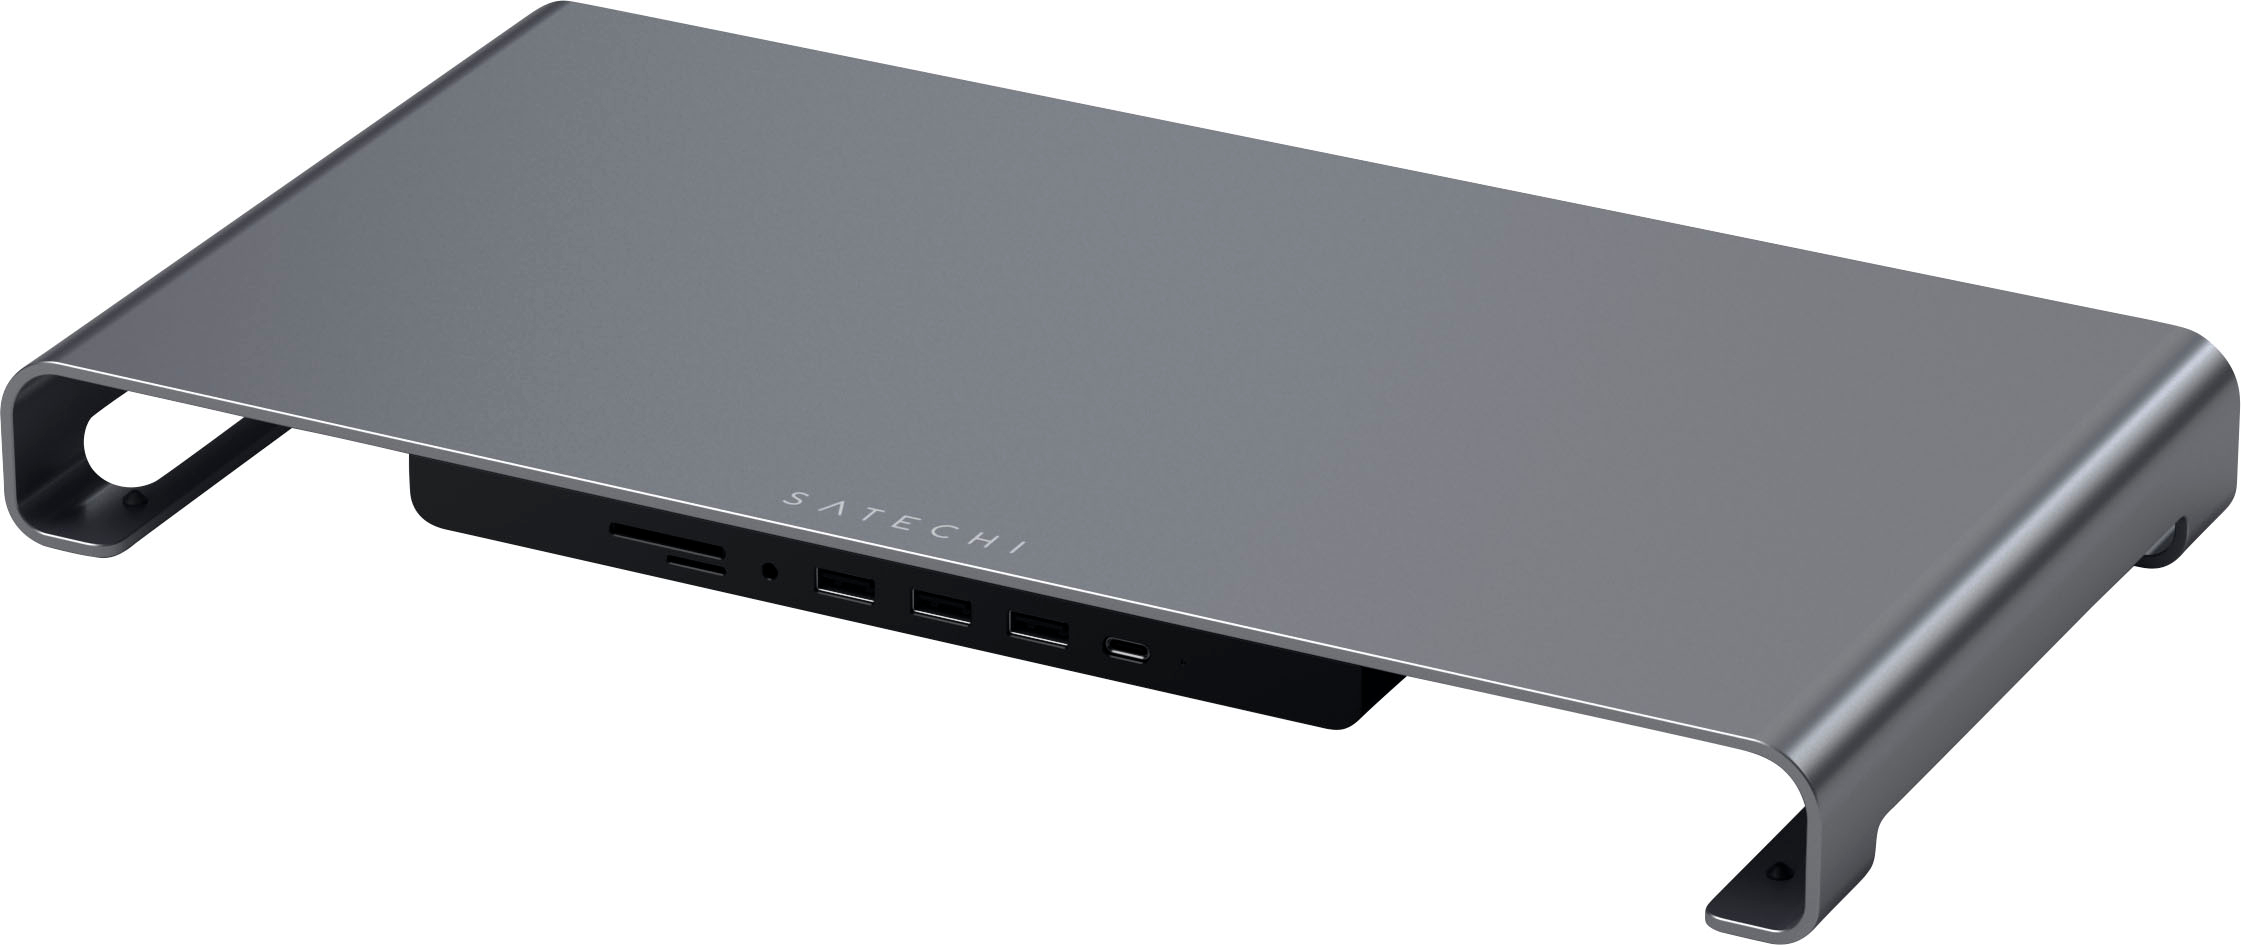 Satechi USB-C Monitor Stand Hub XL Gray ST-UCSHXLM - Best Buy